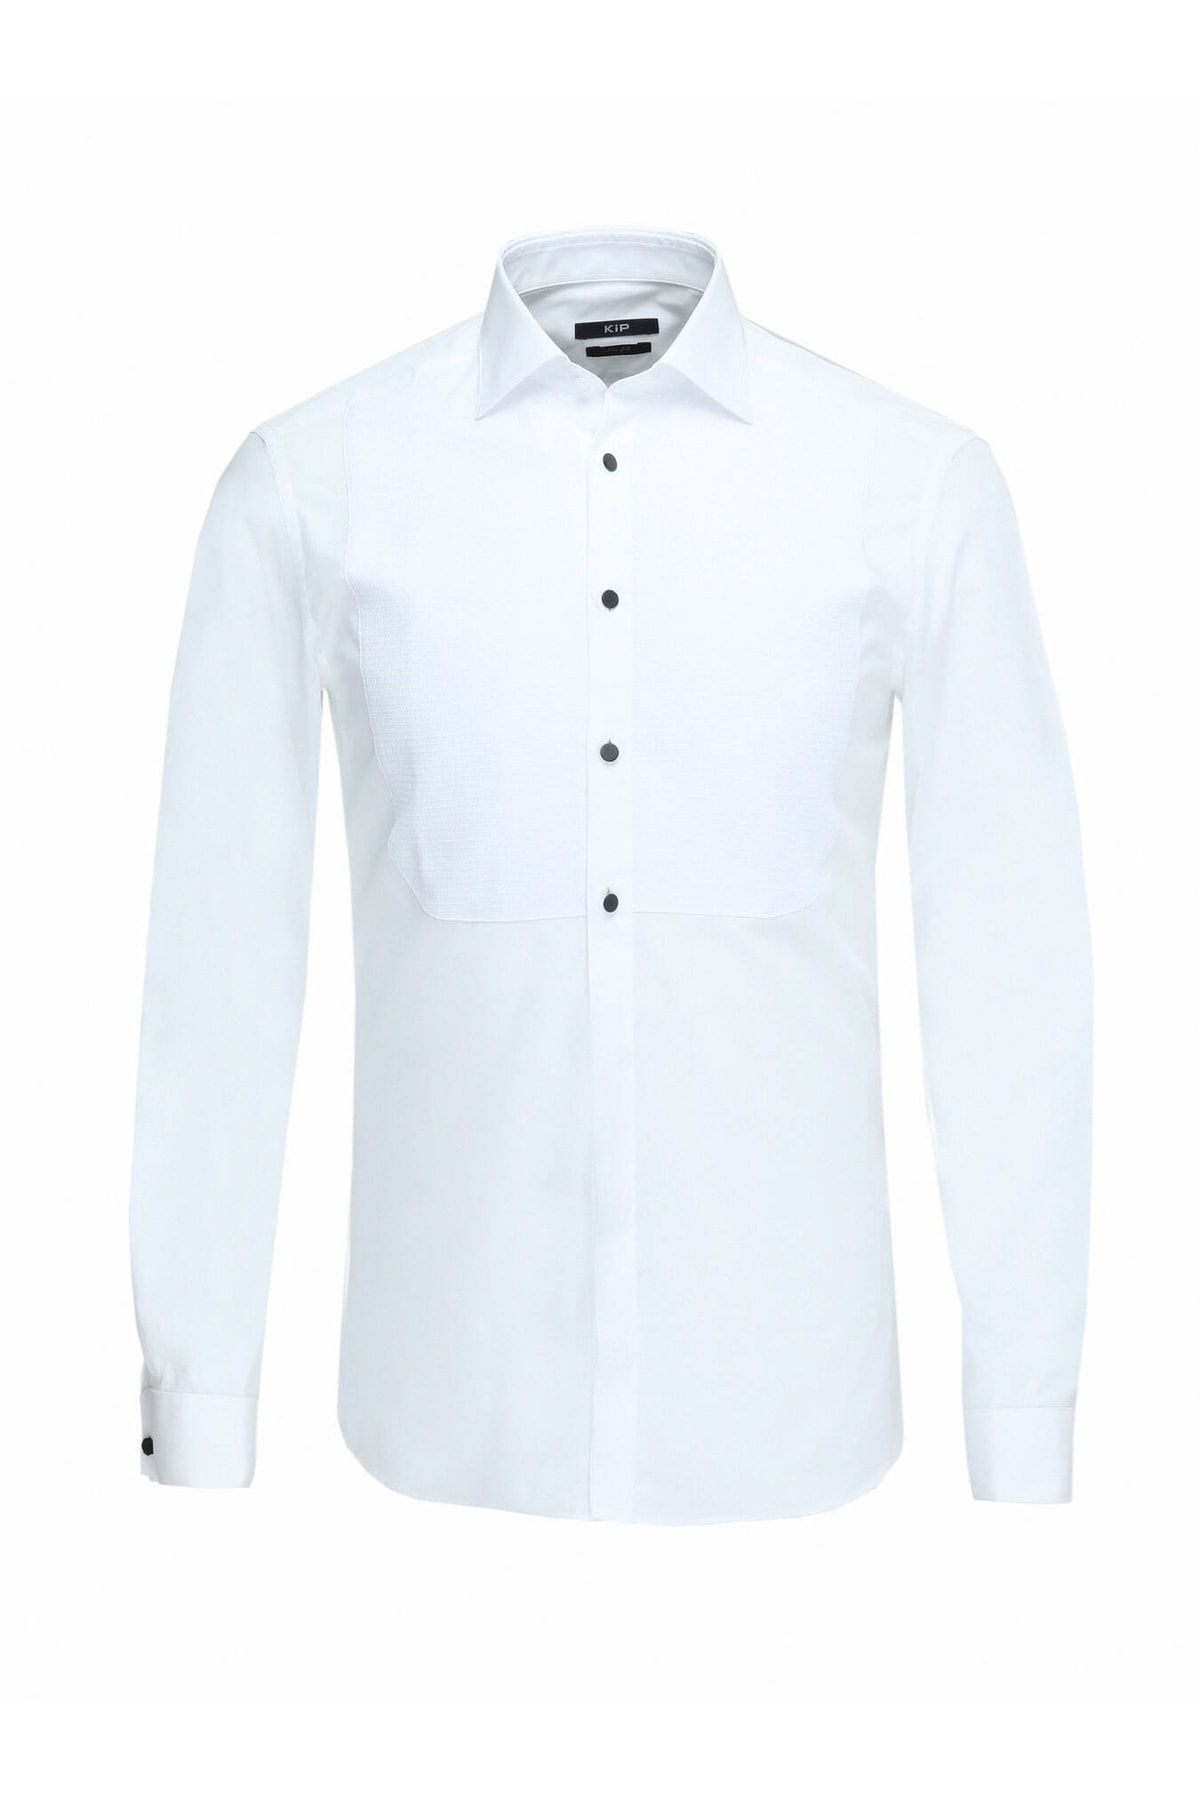 Kip Beyaz Düz Slim Fit Duble Manşet Klasik Yaka Smokin Gömlek